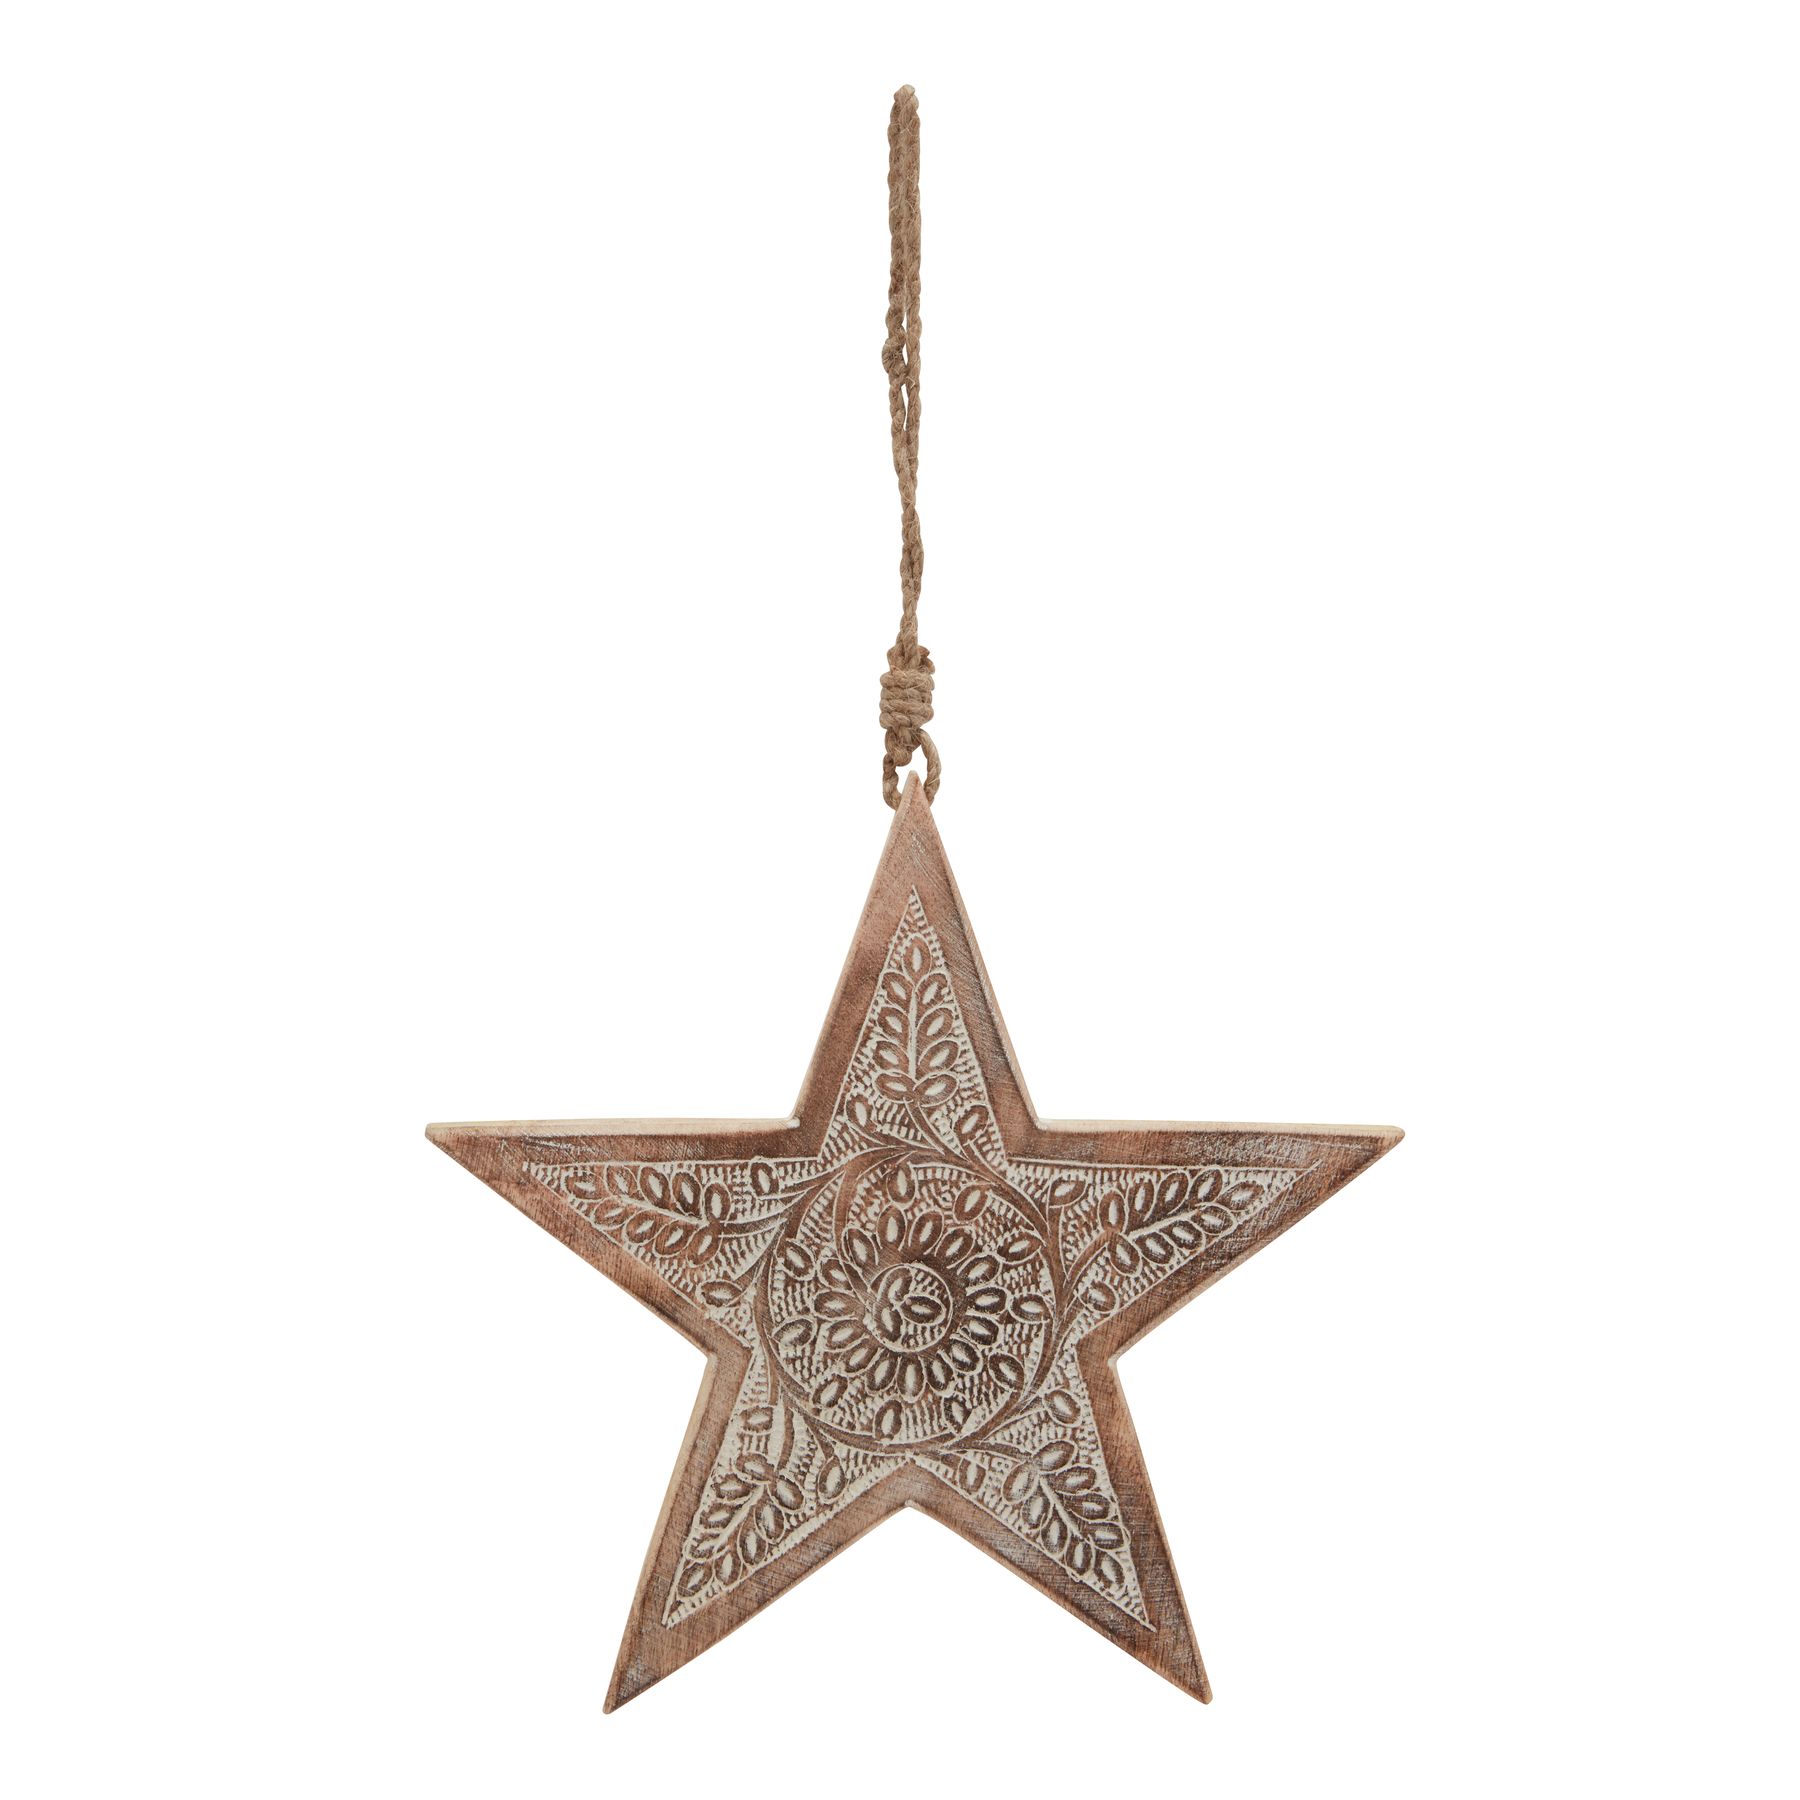 Natural Wooden Large Patterned Hanging Star - Image 2